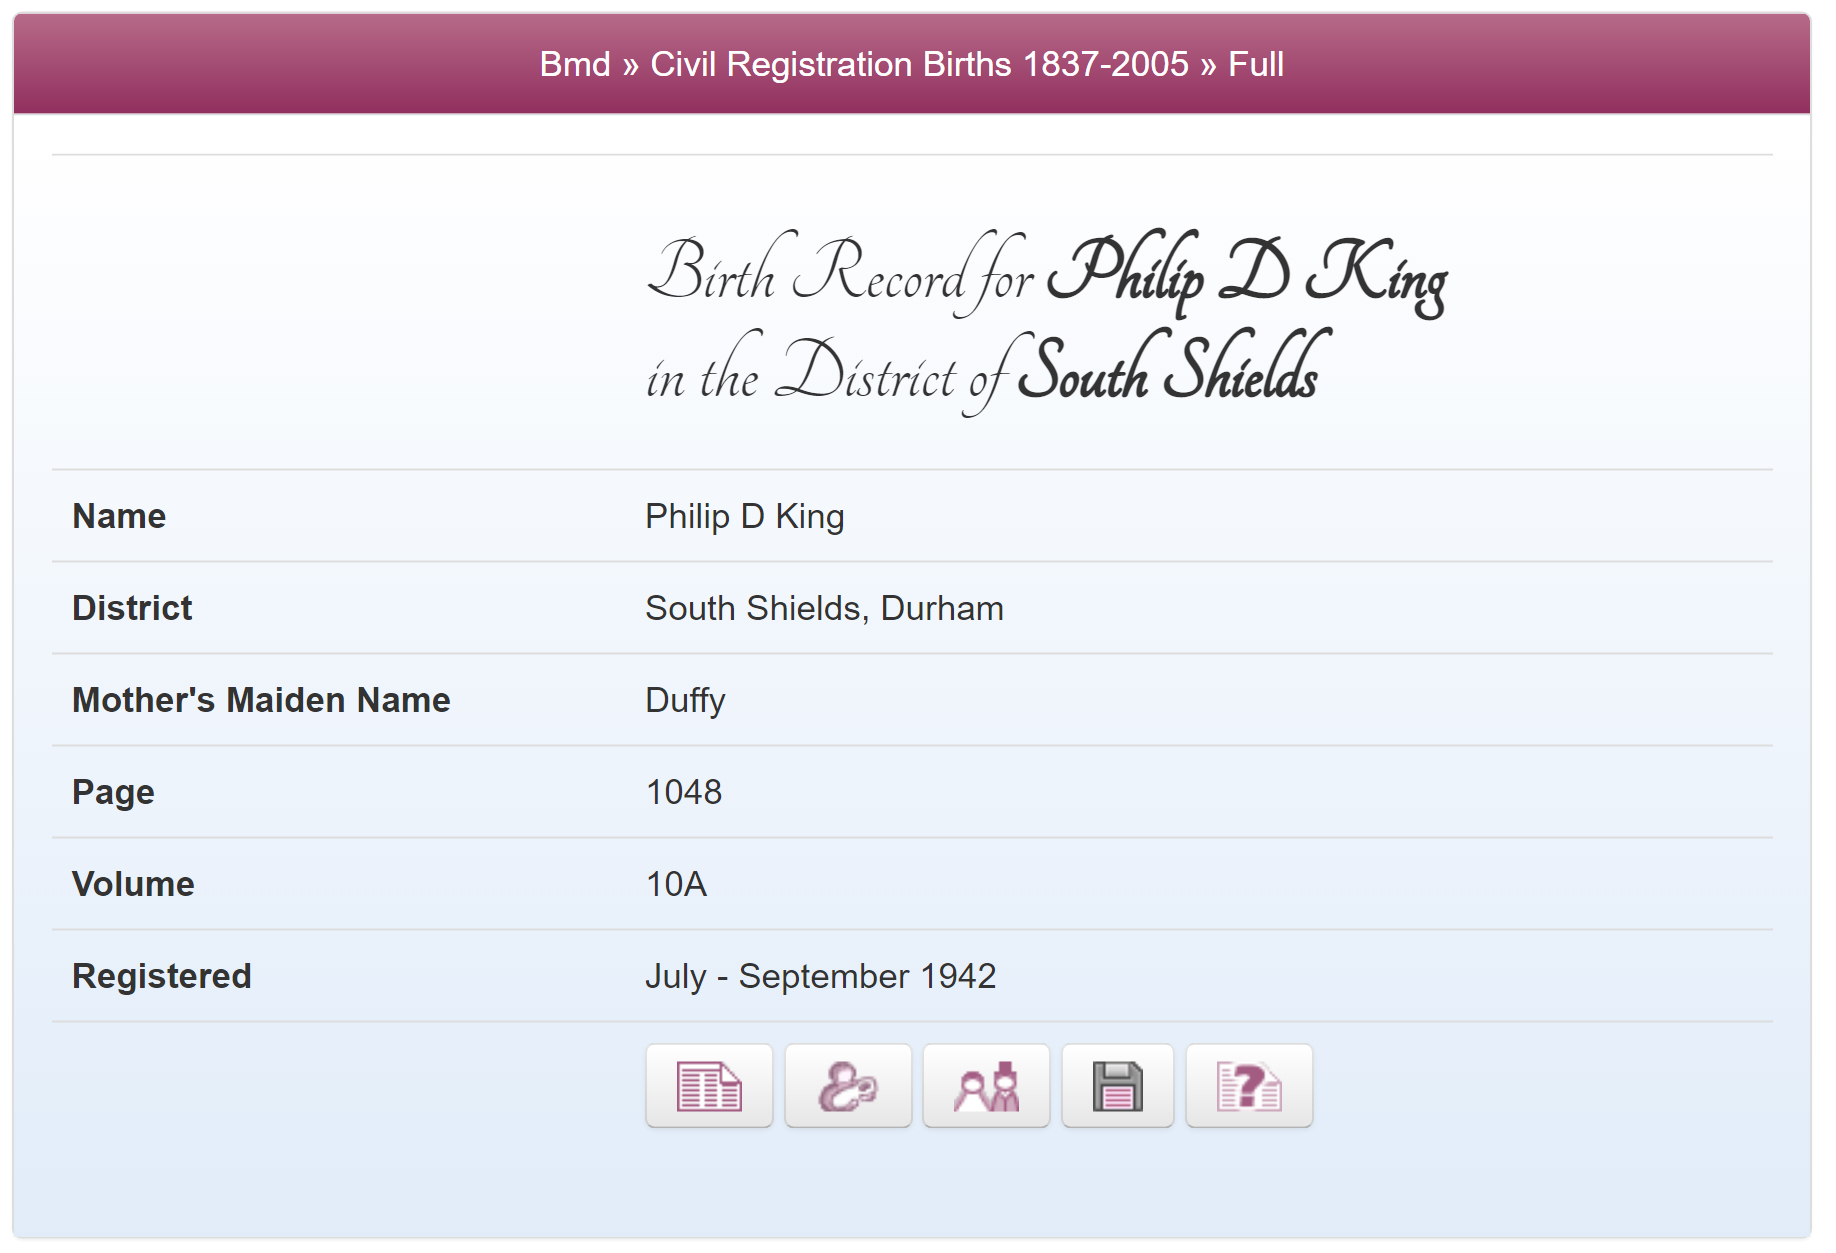 Philip King's birth record